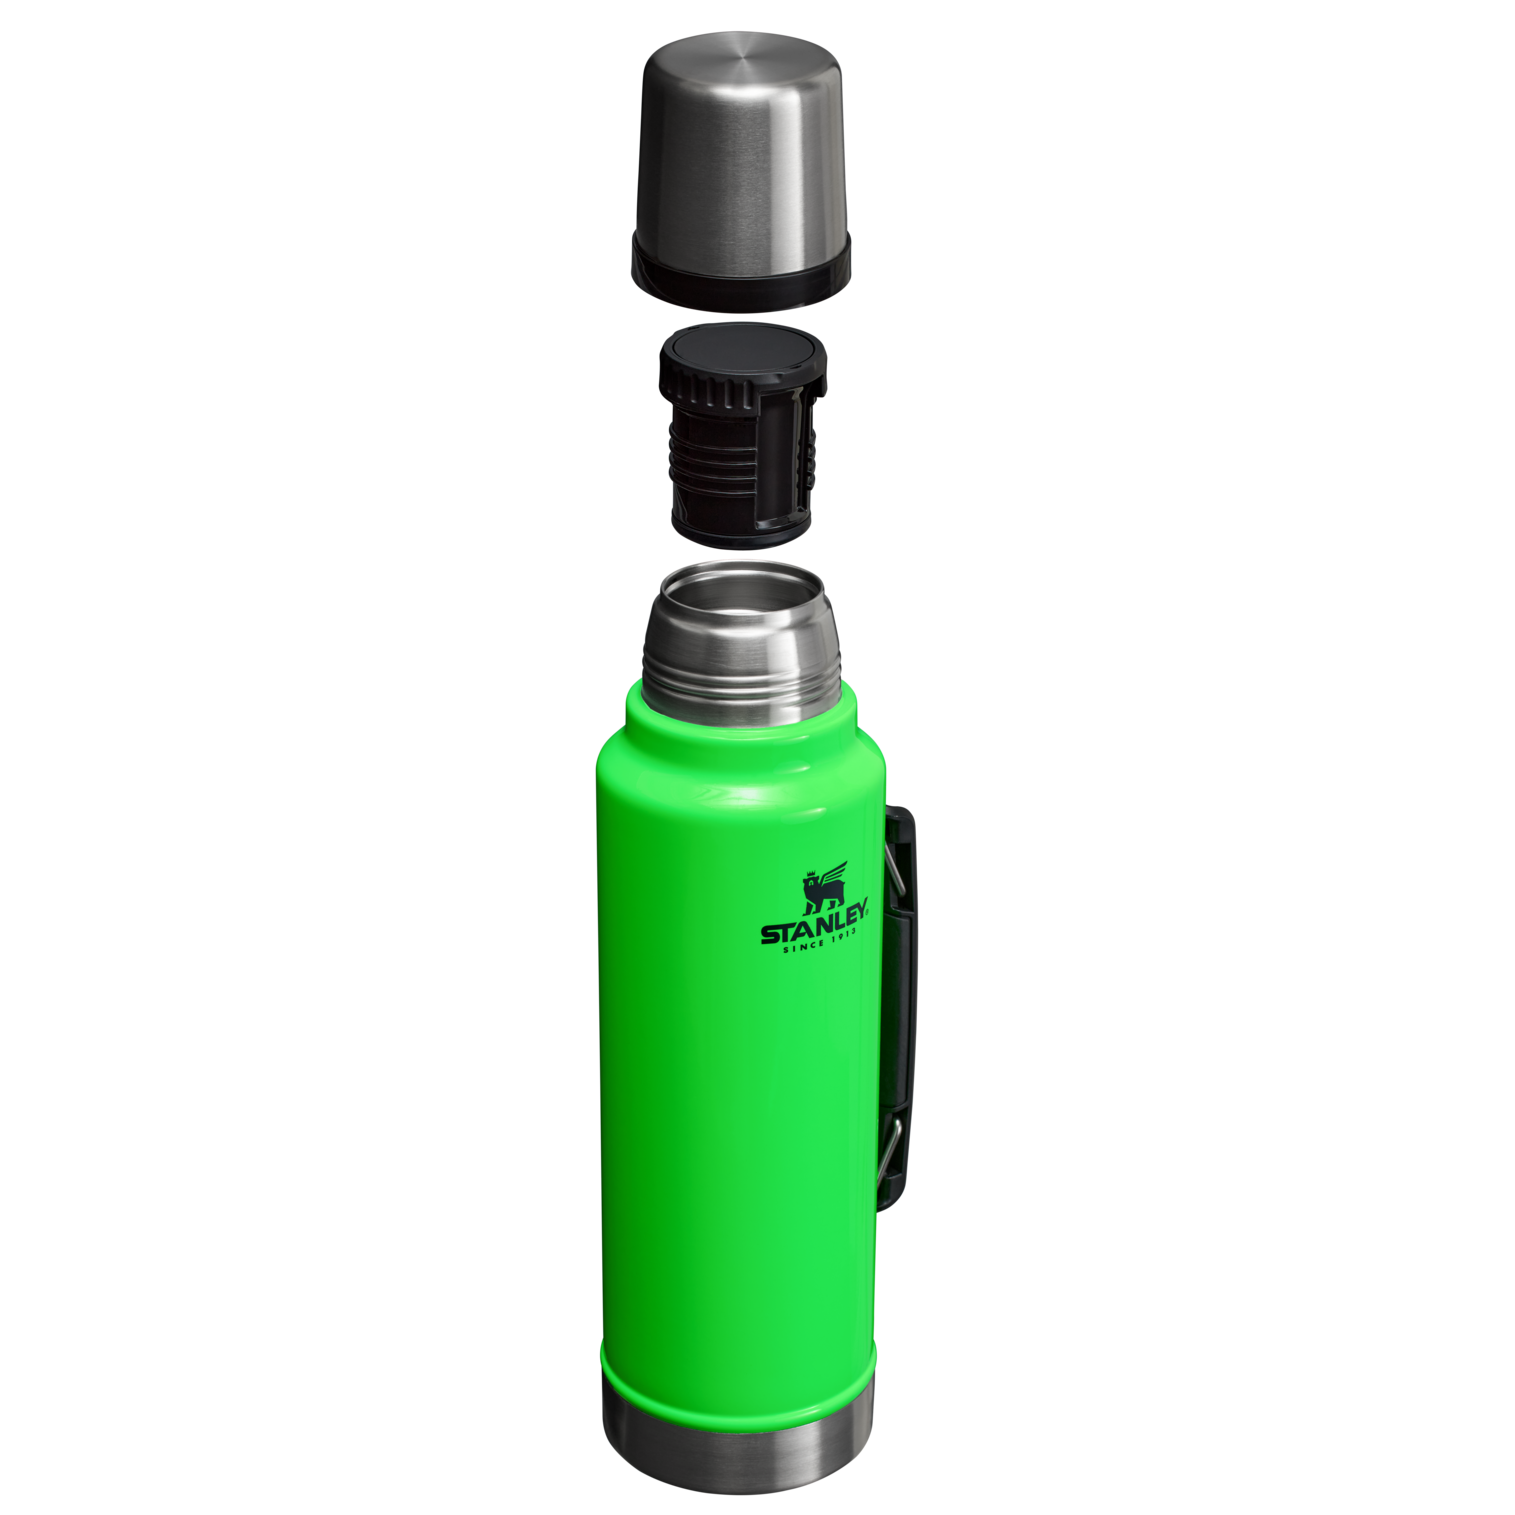 The Neon Classic Legendary Bottle | 1.5 QT: Neon Green